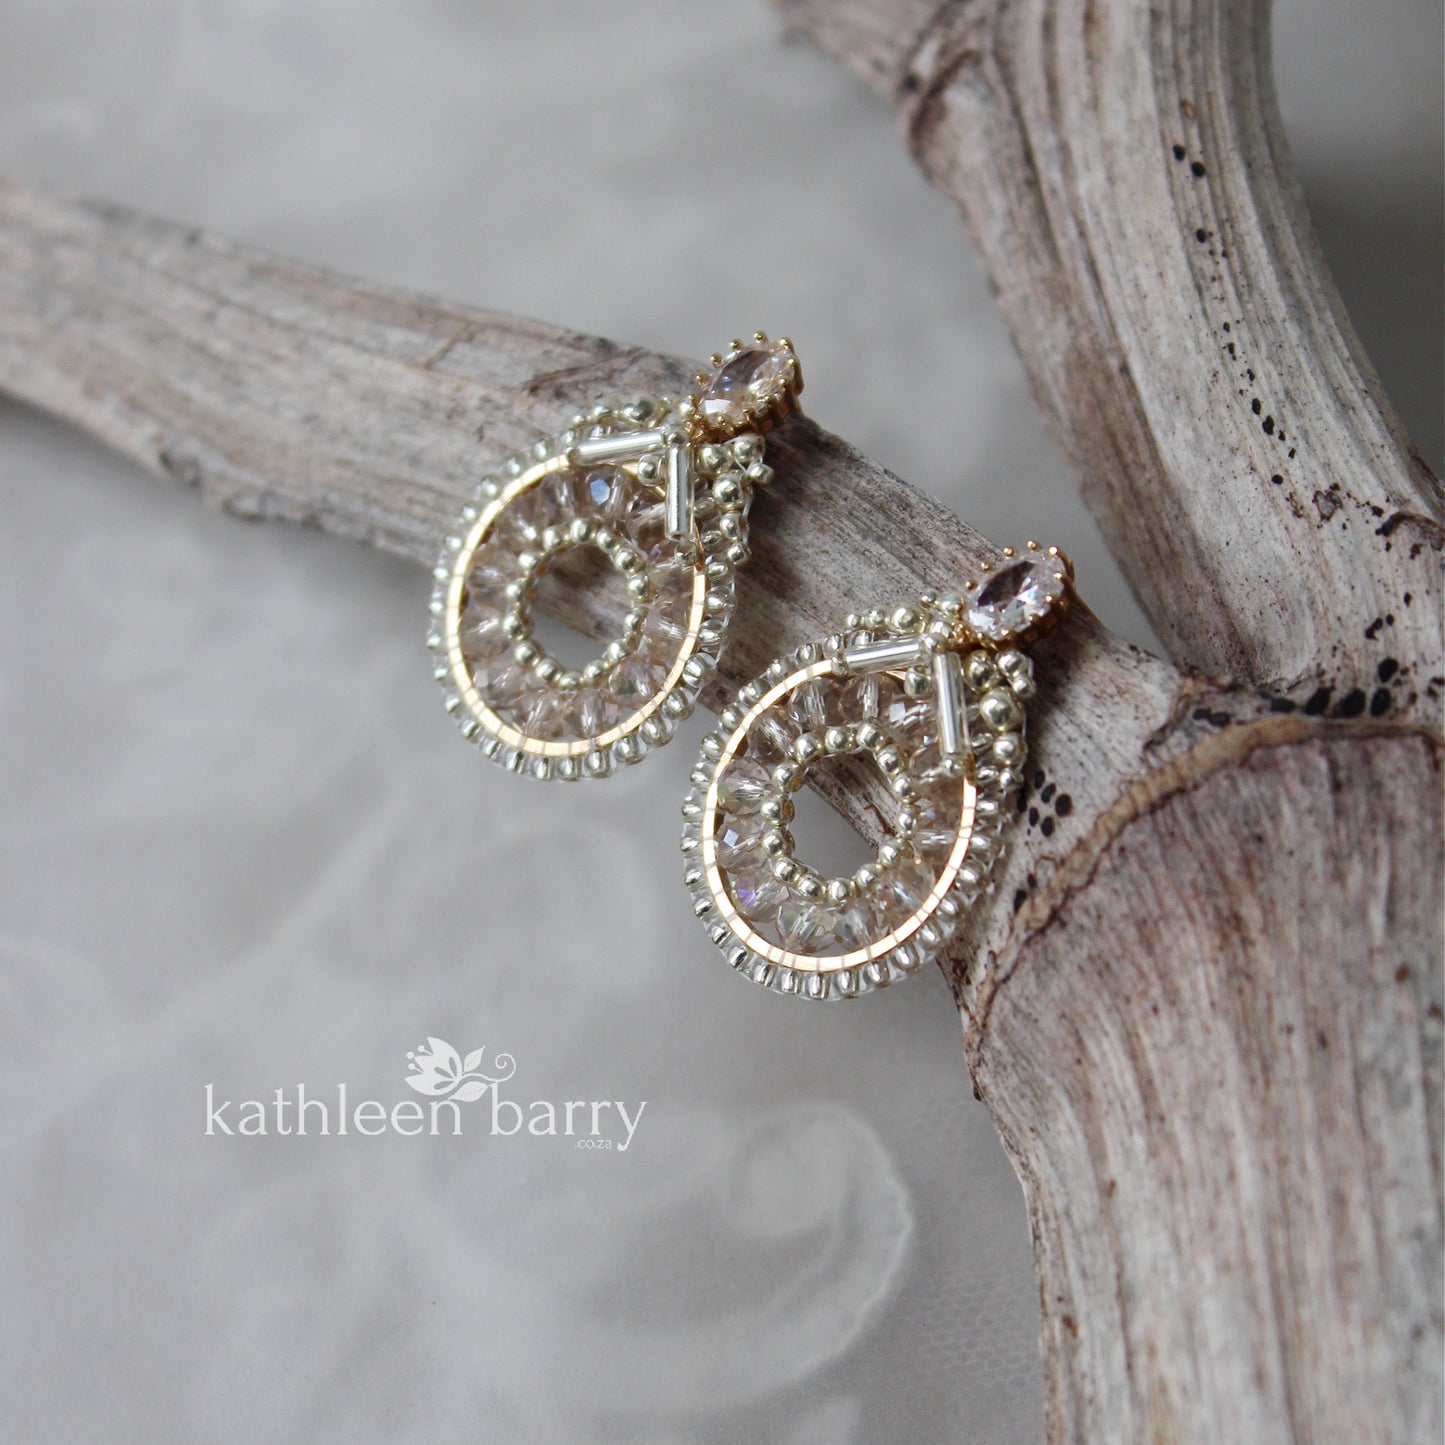 Berdean beaded hoop stud earrings - Champagne, silver & gold - Custom colors available